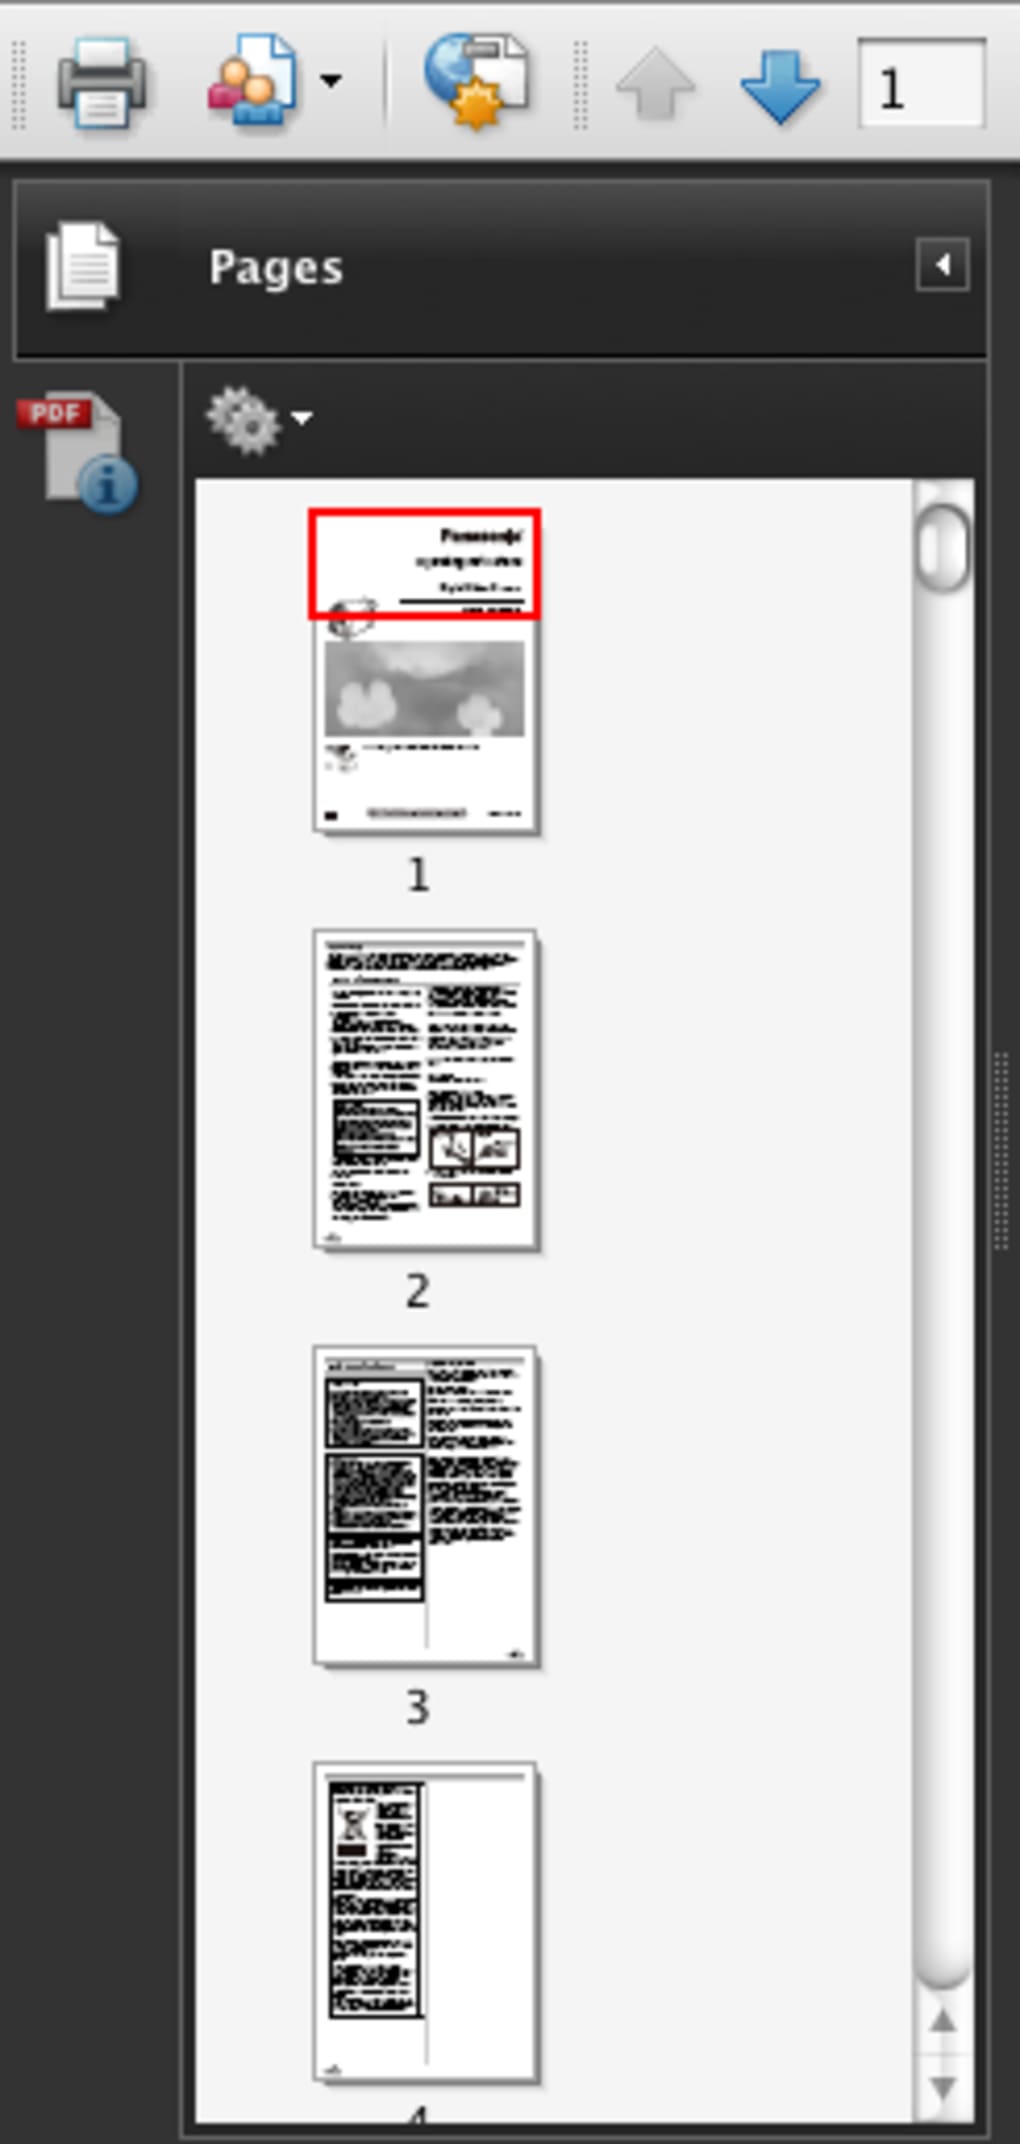 Adobe reader 8 download for mac